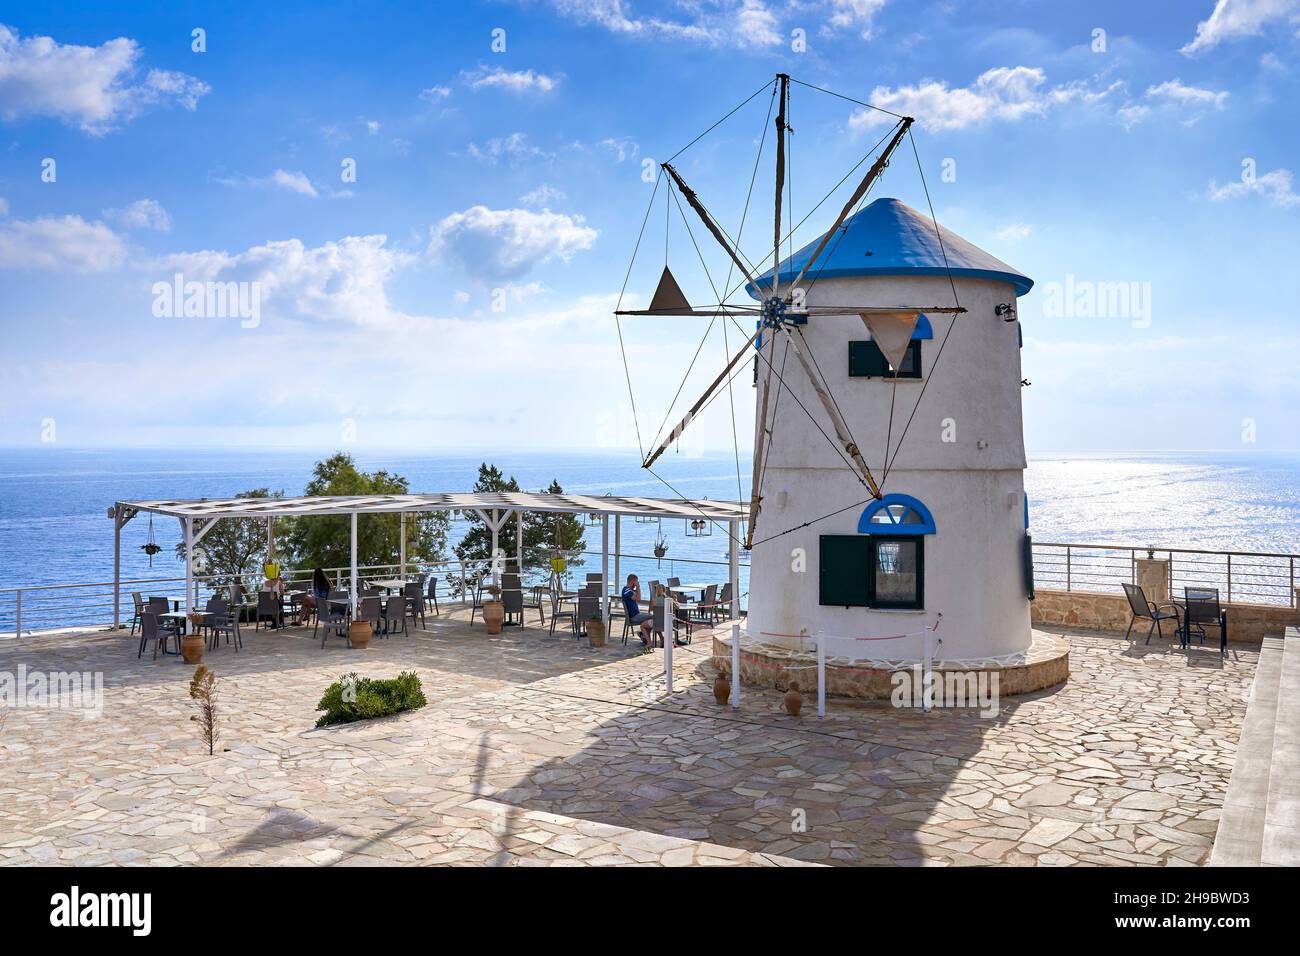 Traditionelle weiße Windmühle, Kap Skinari, Insel Zakynthos, Griechenland Stockfoto